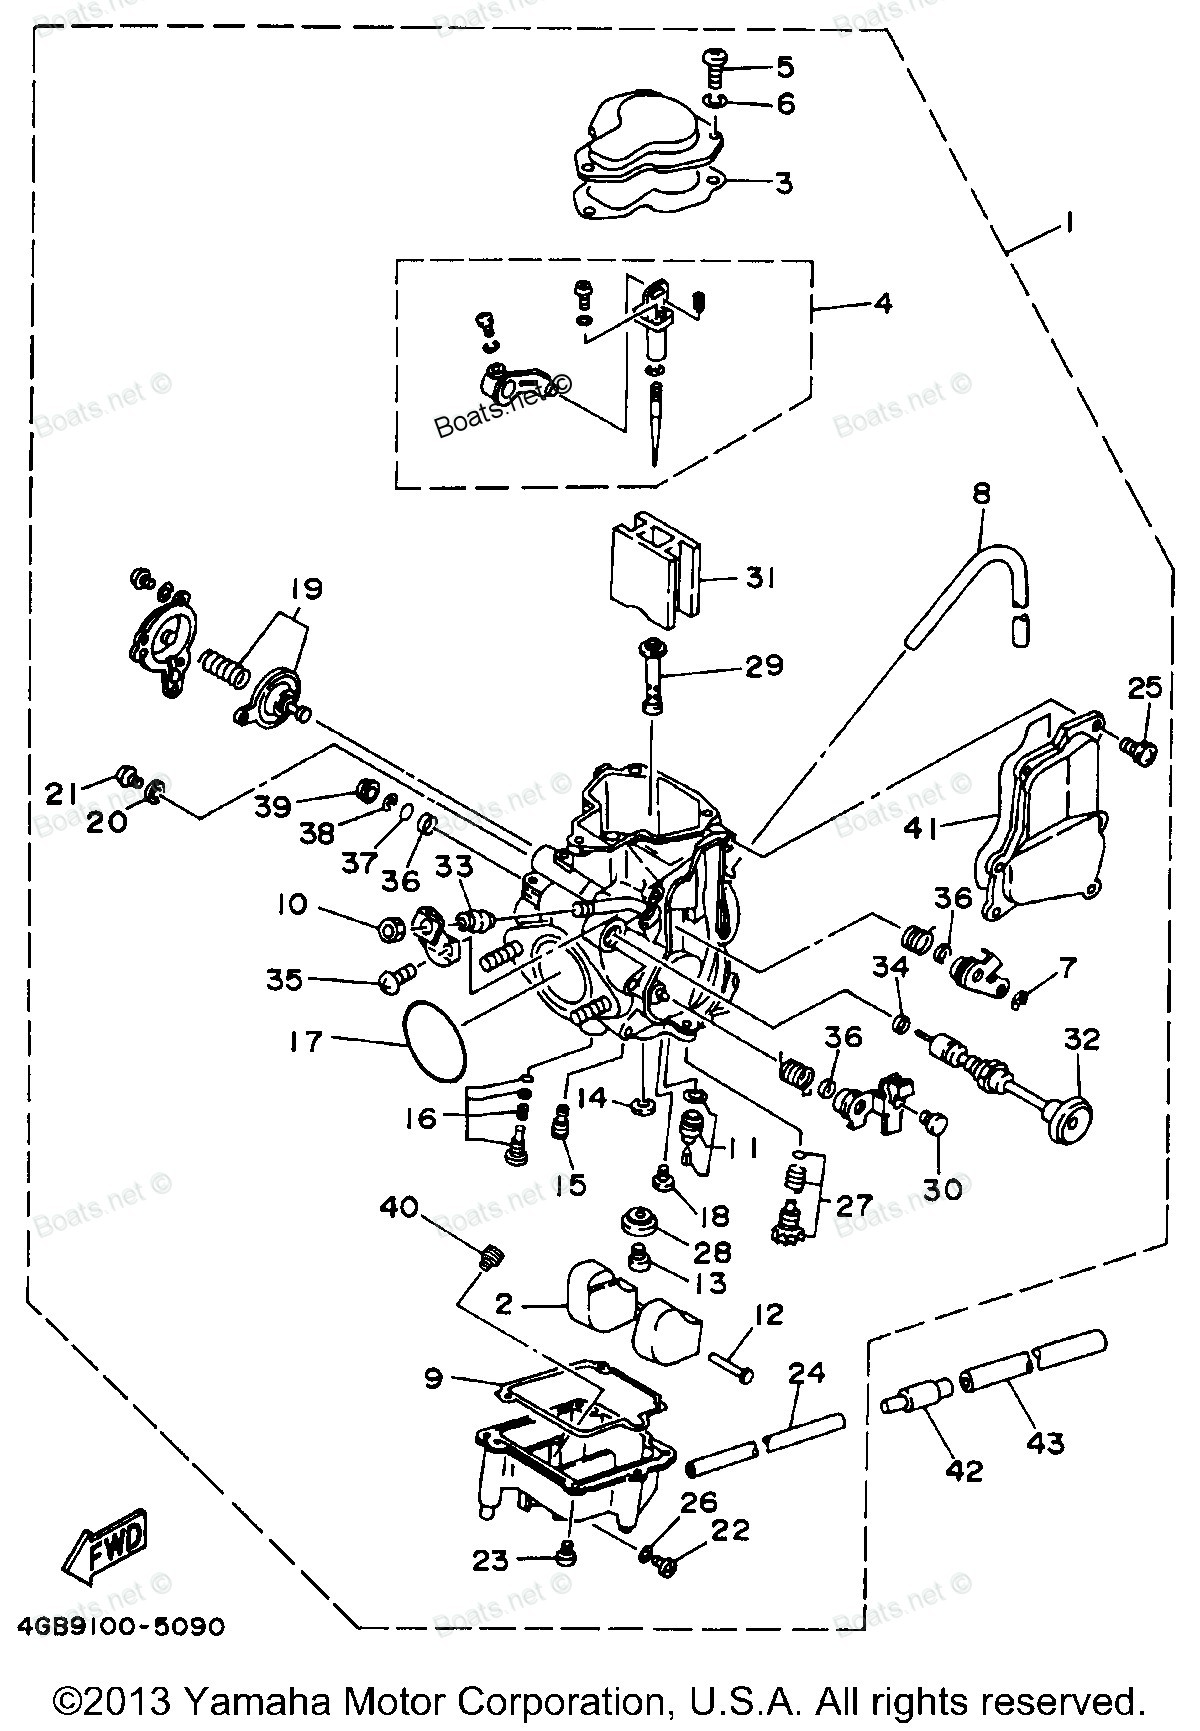 Diagram Firing Order Chevy 350 Distributor Wiring Diagram